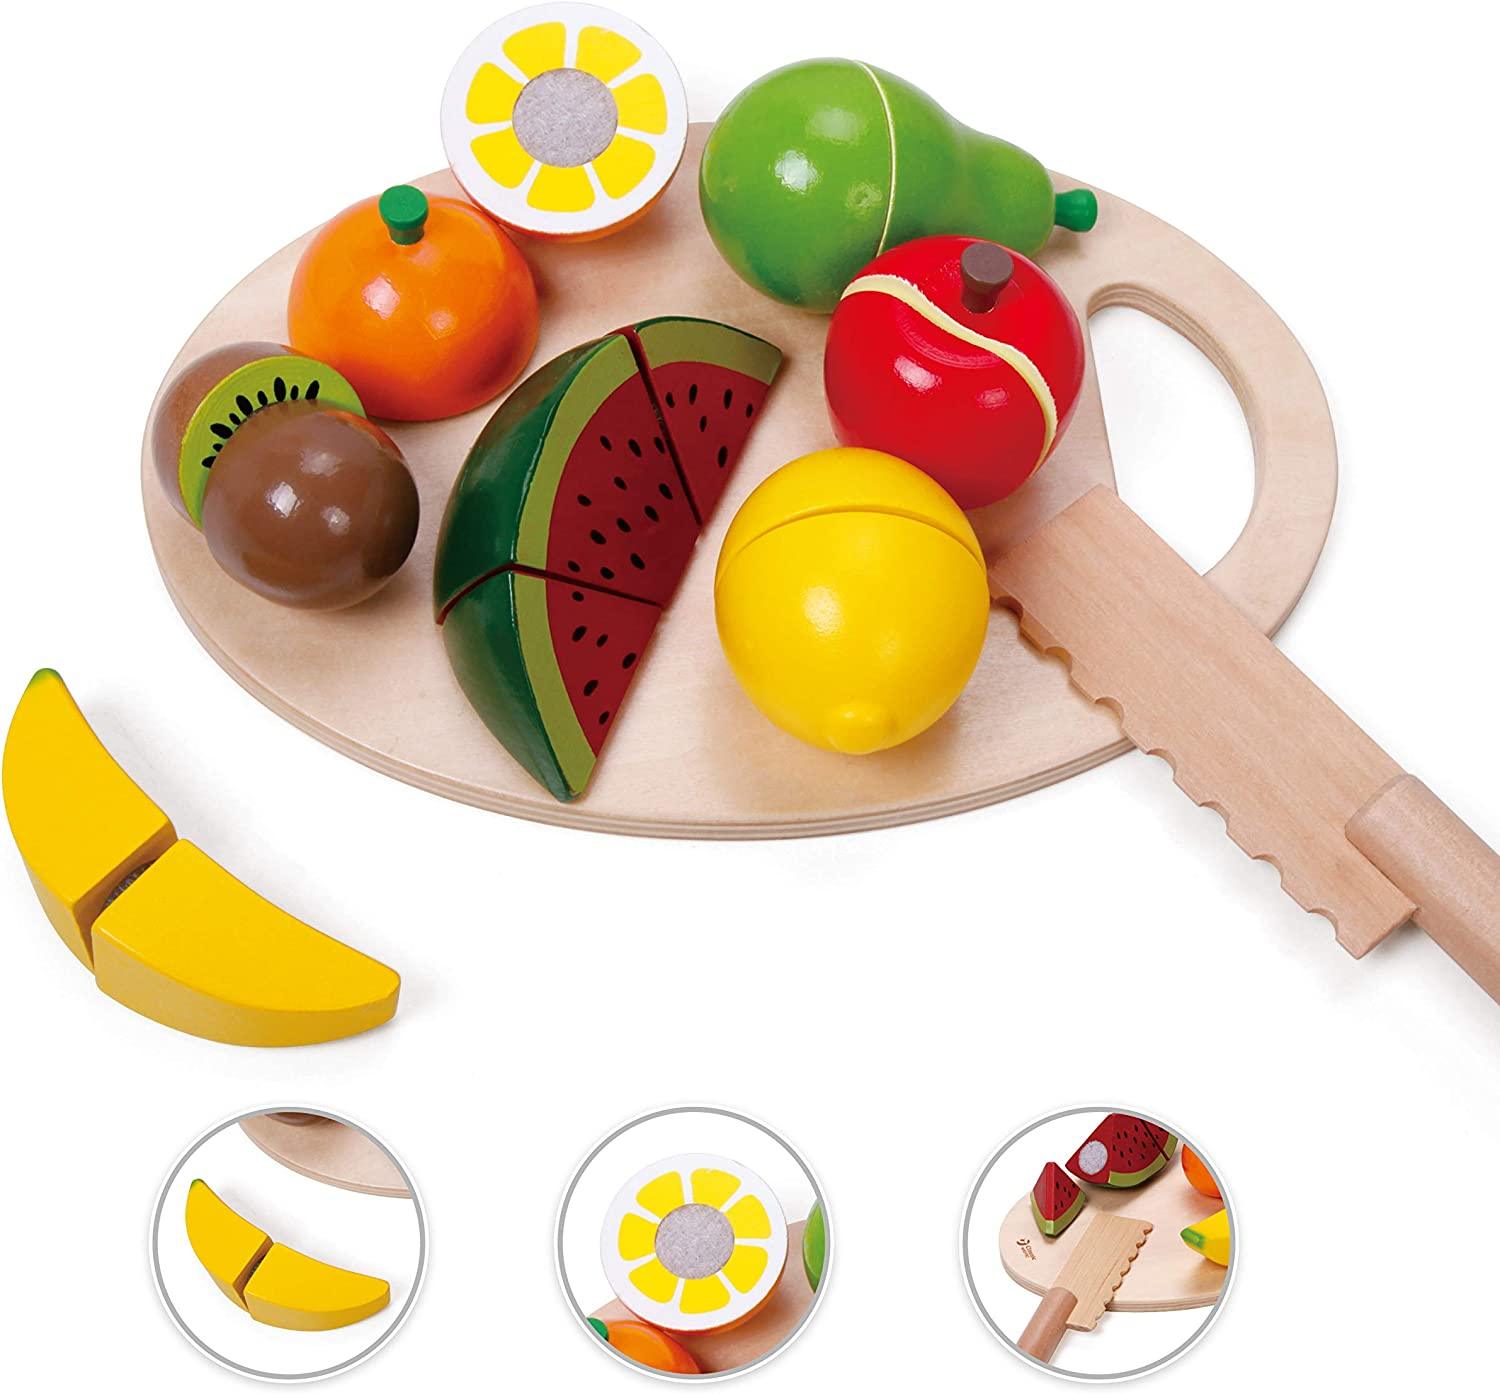 Children's Wooden Cutting Kit - Fruits - MoonyBoon